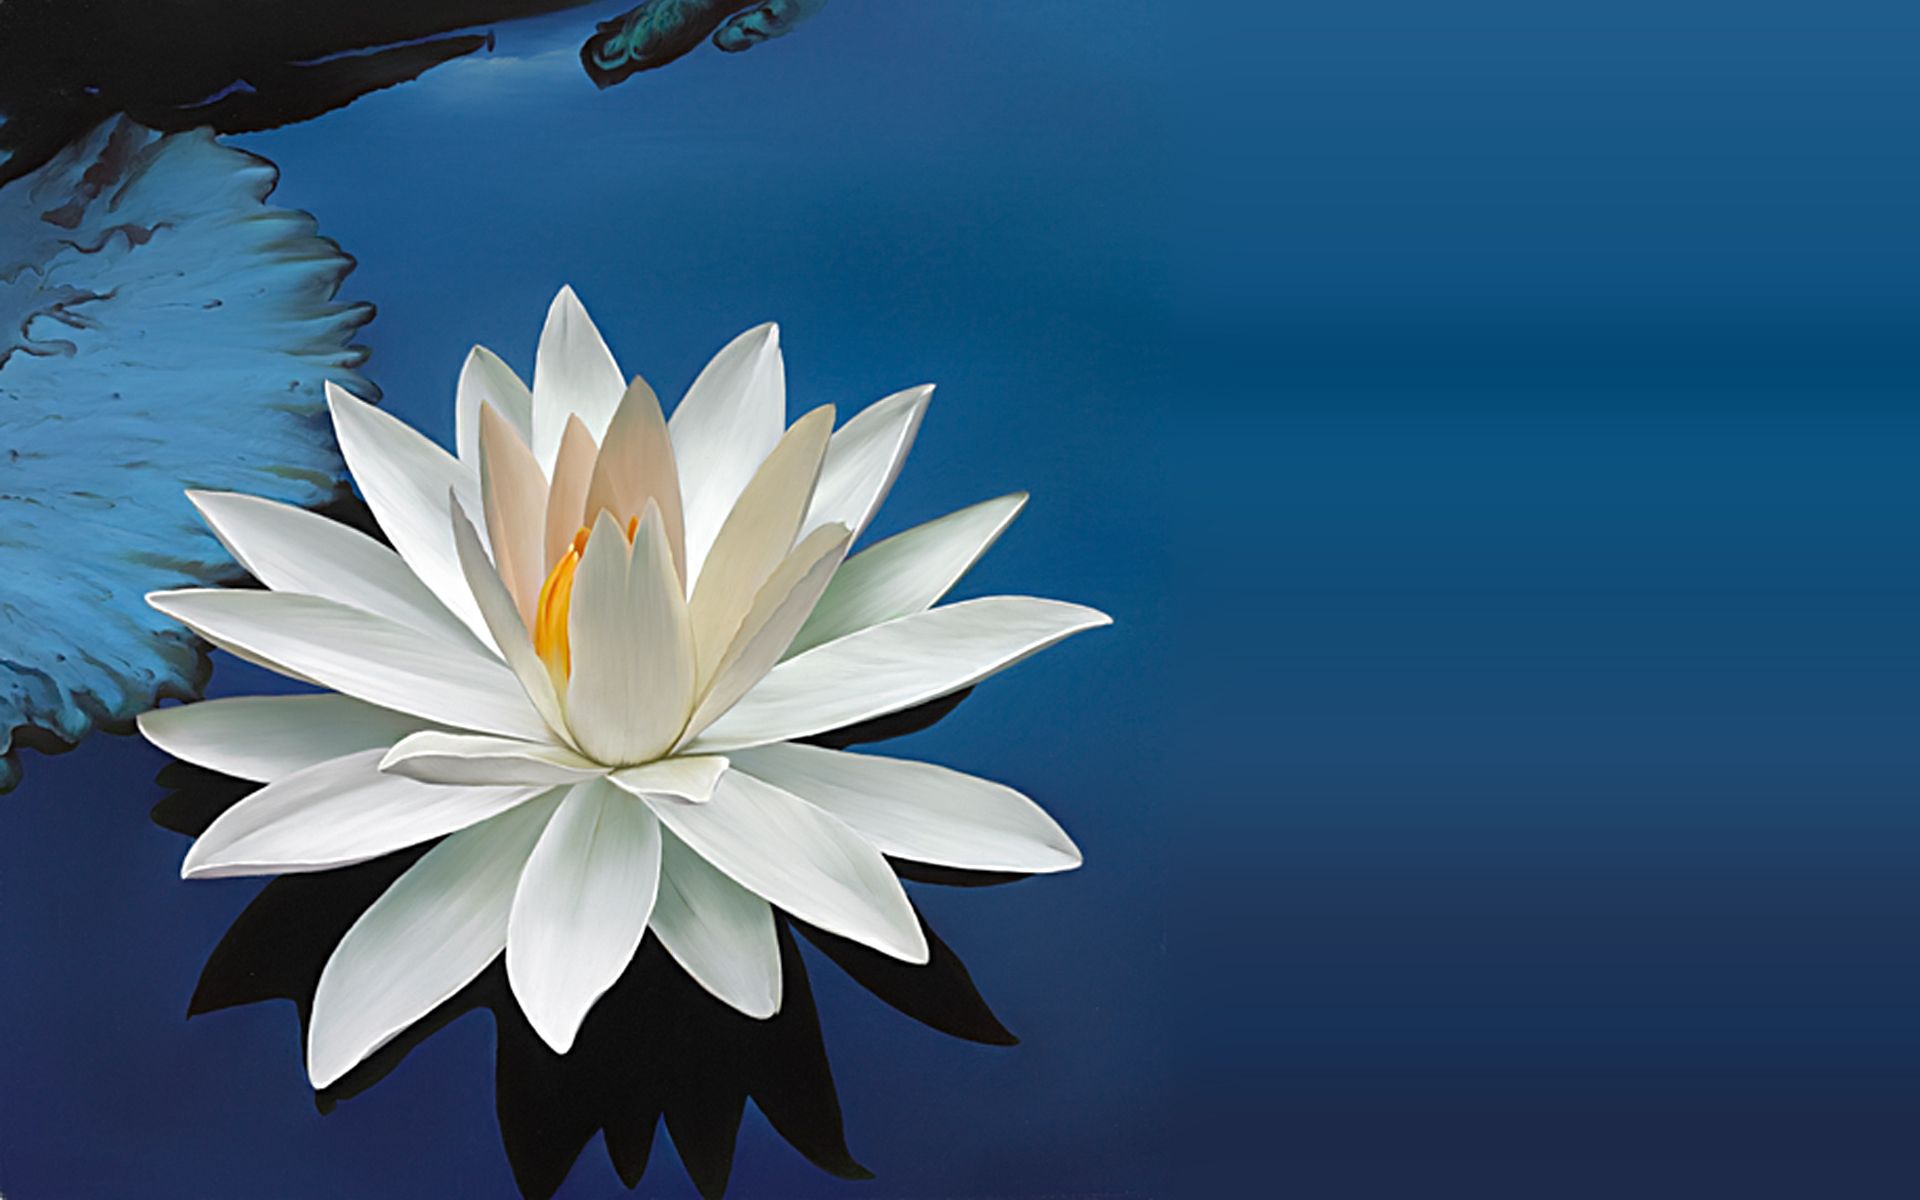 Lotus Flower Live Wallpaper: Amazon.es: Appstore para Android